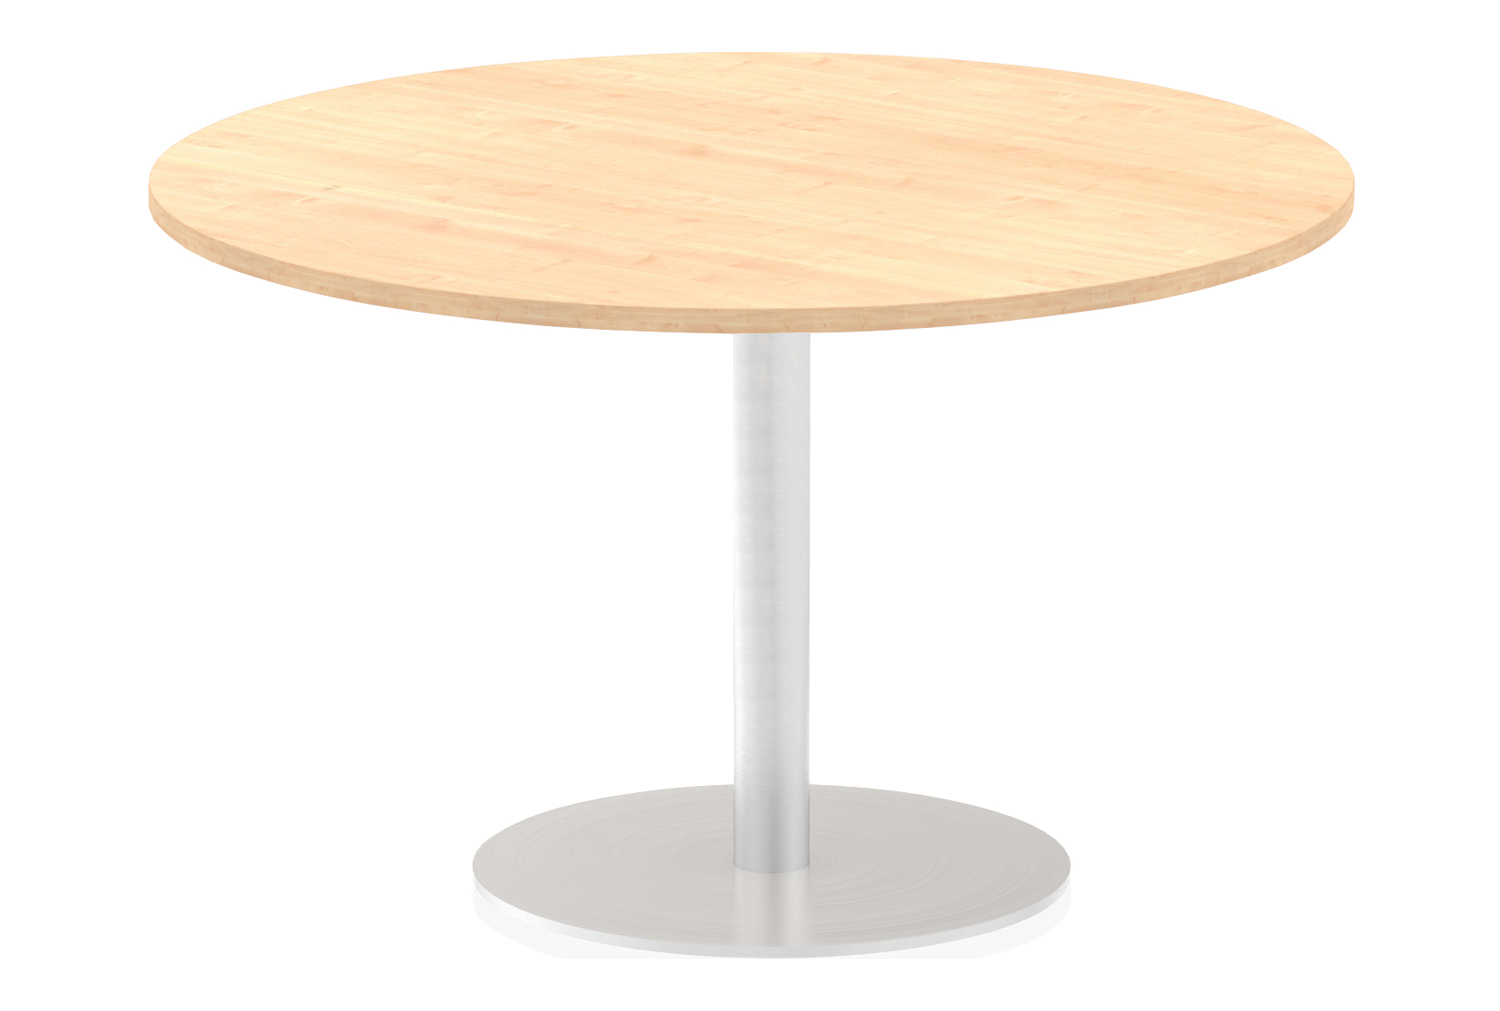 Vitali Radial Base Circular Dining Table, 120diax73h (cm), Maple